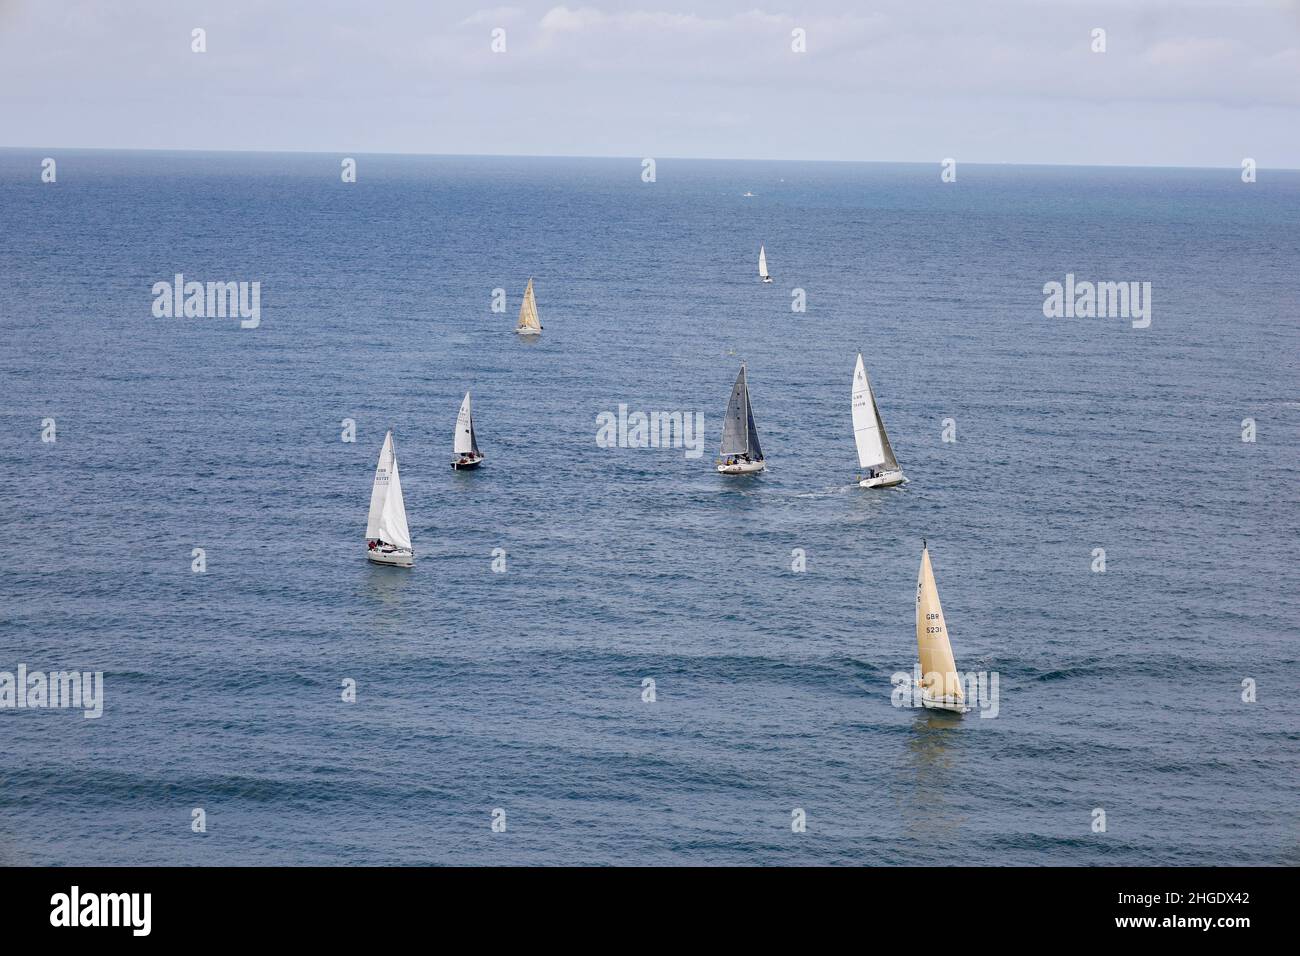 Small sailboats on the sea England UK Stock Photo